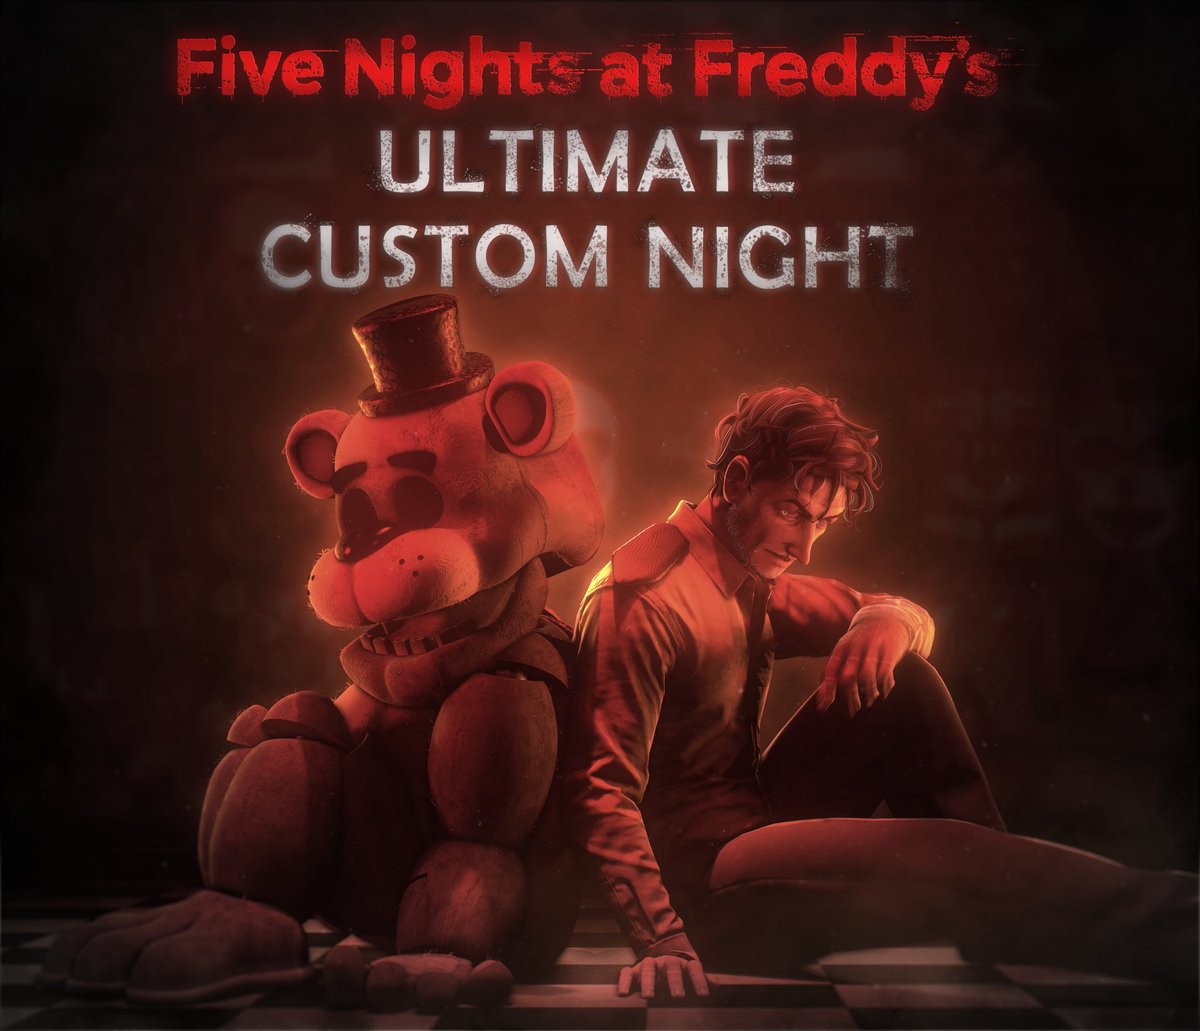 Happy 5th anniversary Ultimate Custom Night
#FNAF #fivenightsatfreddys #UltimateCustomNight #Williamafton #fnaffanart